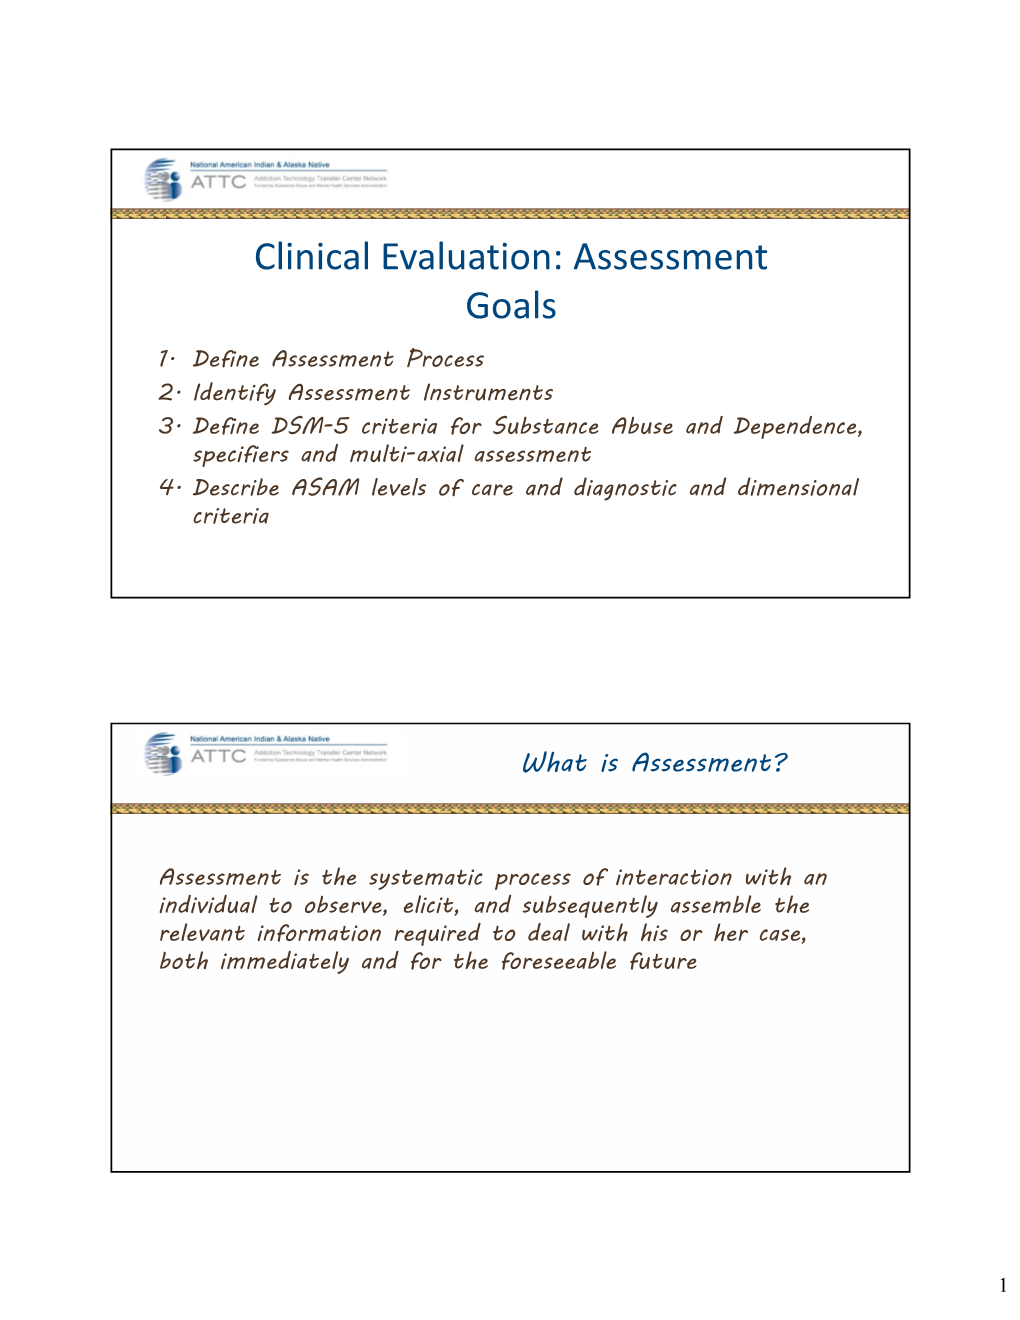 Clinical Evaluation: Assessment Goals